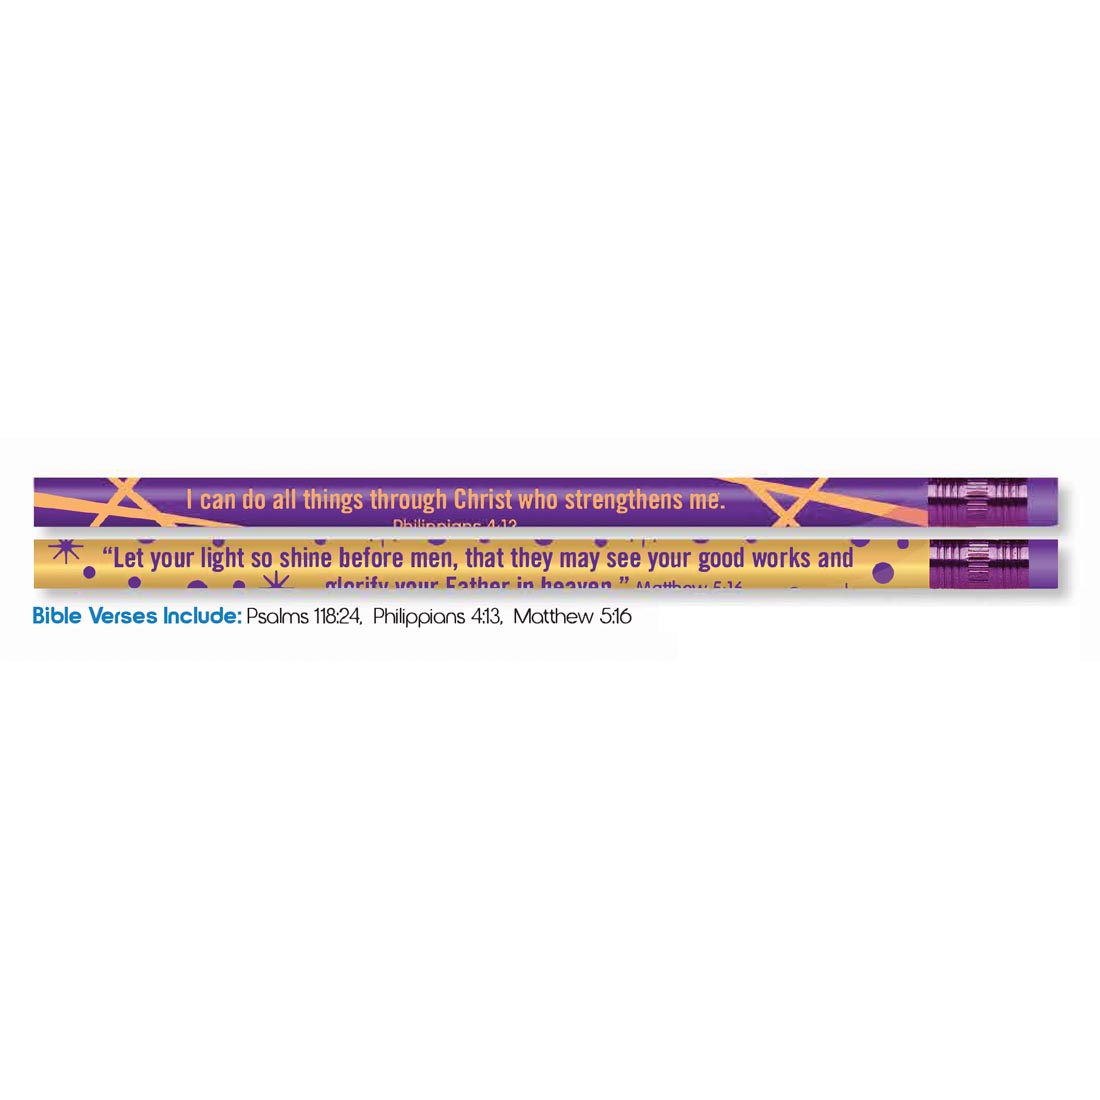 2 standard pencils showing different Bible verses